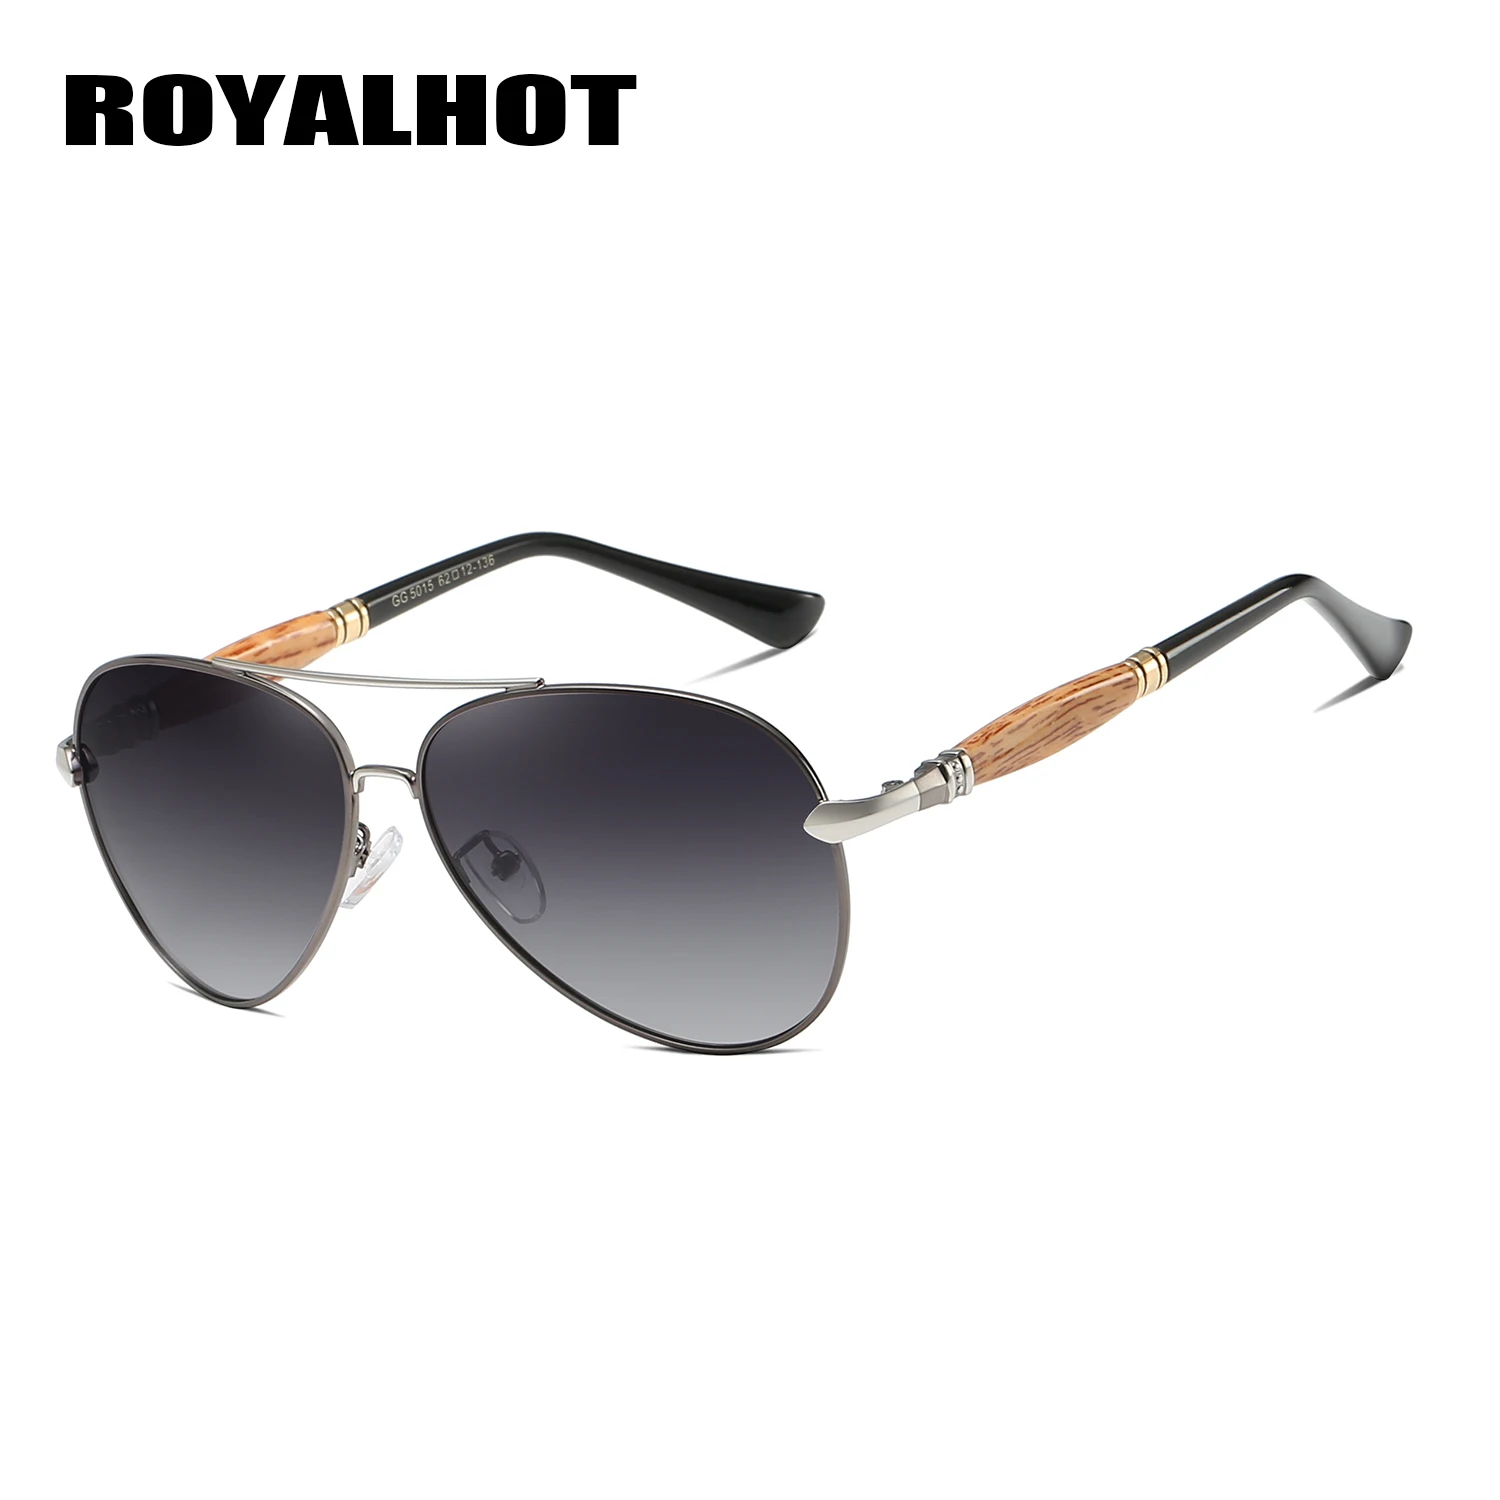 RoyalHot Men Women Polarized Sunglasses Oval Aloy&Wood Frame Sun Glasses Driving Glasses Shades Oculos masculino Male 900151 - Цвет линз: Grey Silver